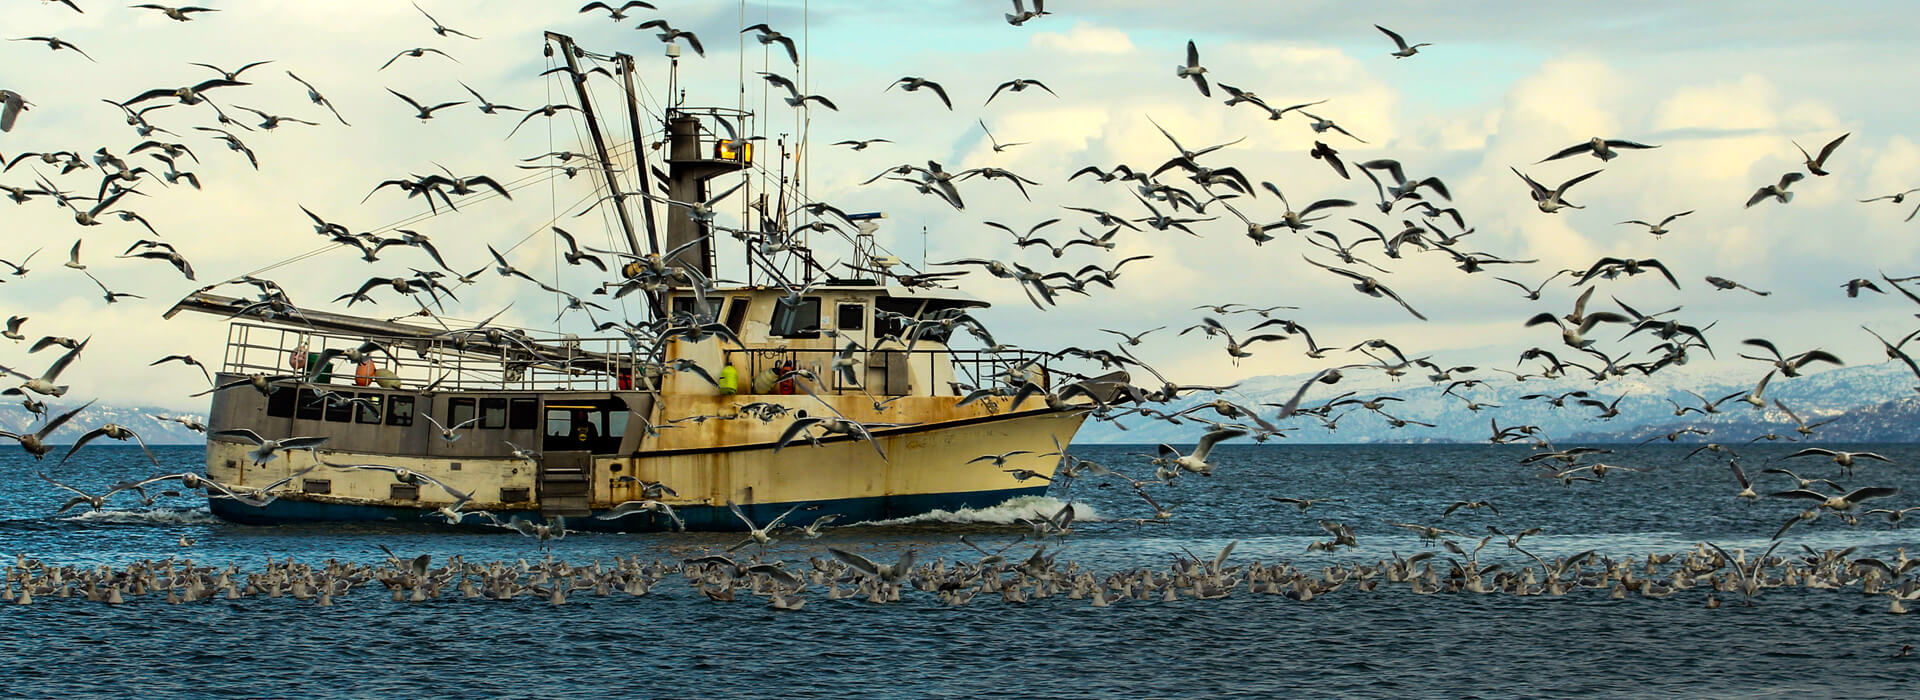 Fishing boat on Alaska's coast, M. Cornelius/Shutterstock